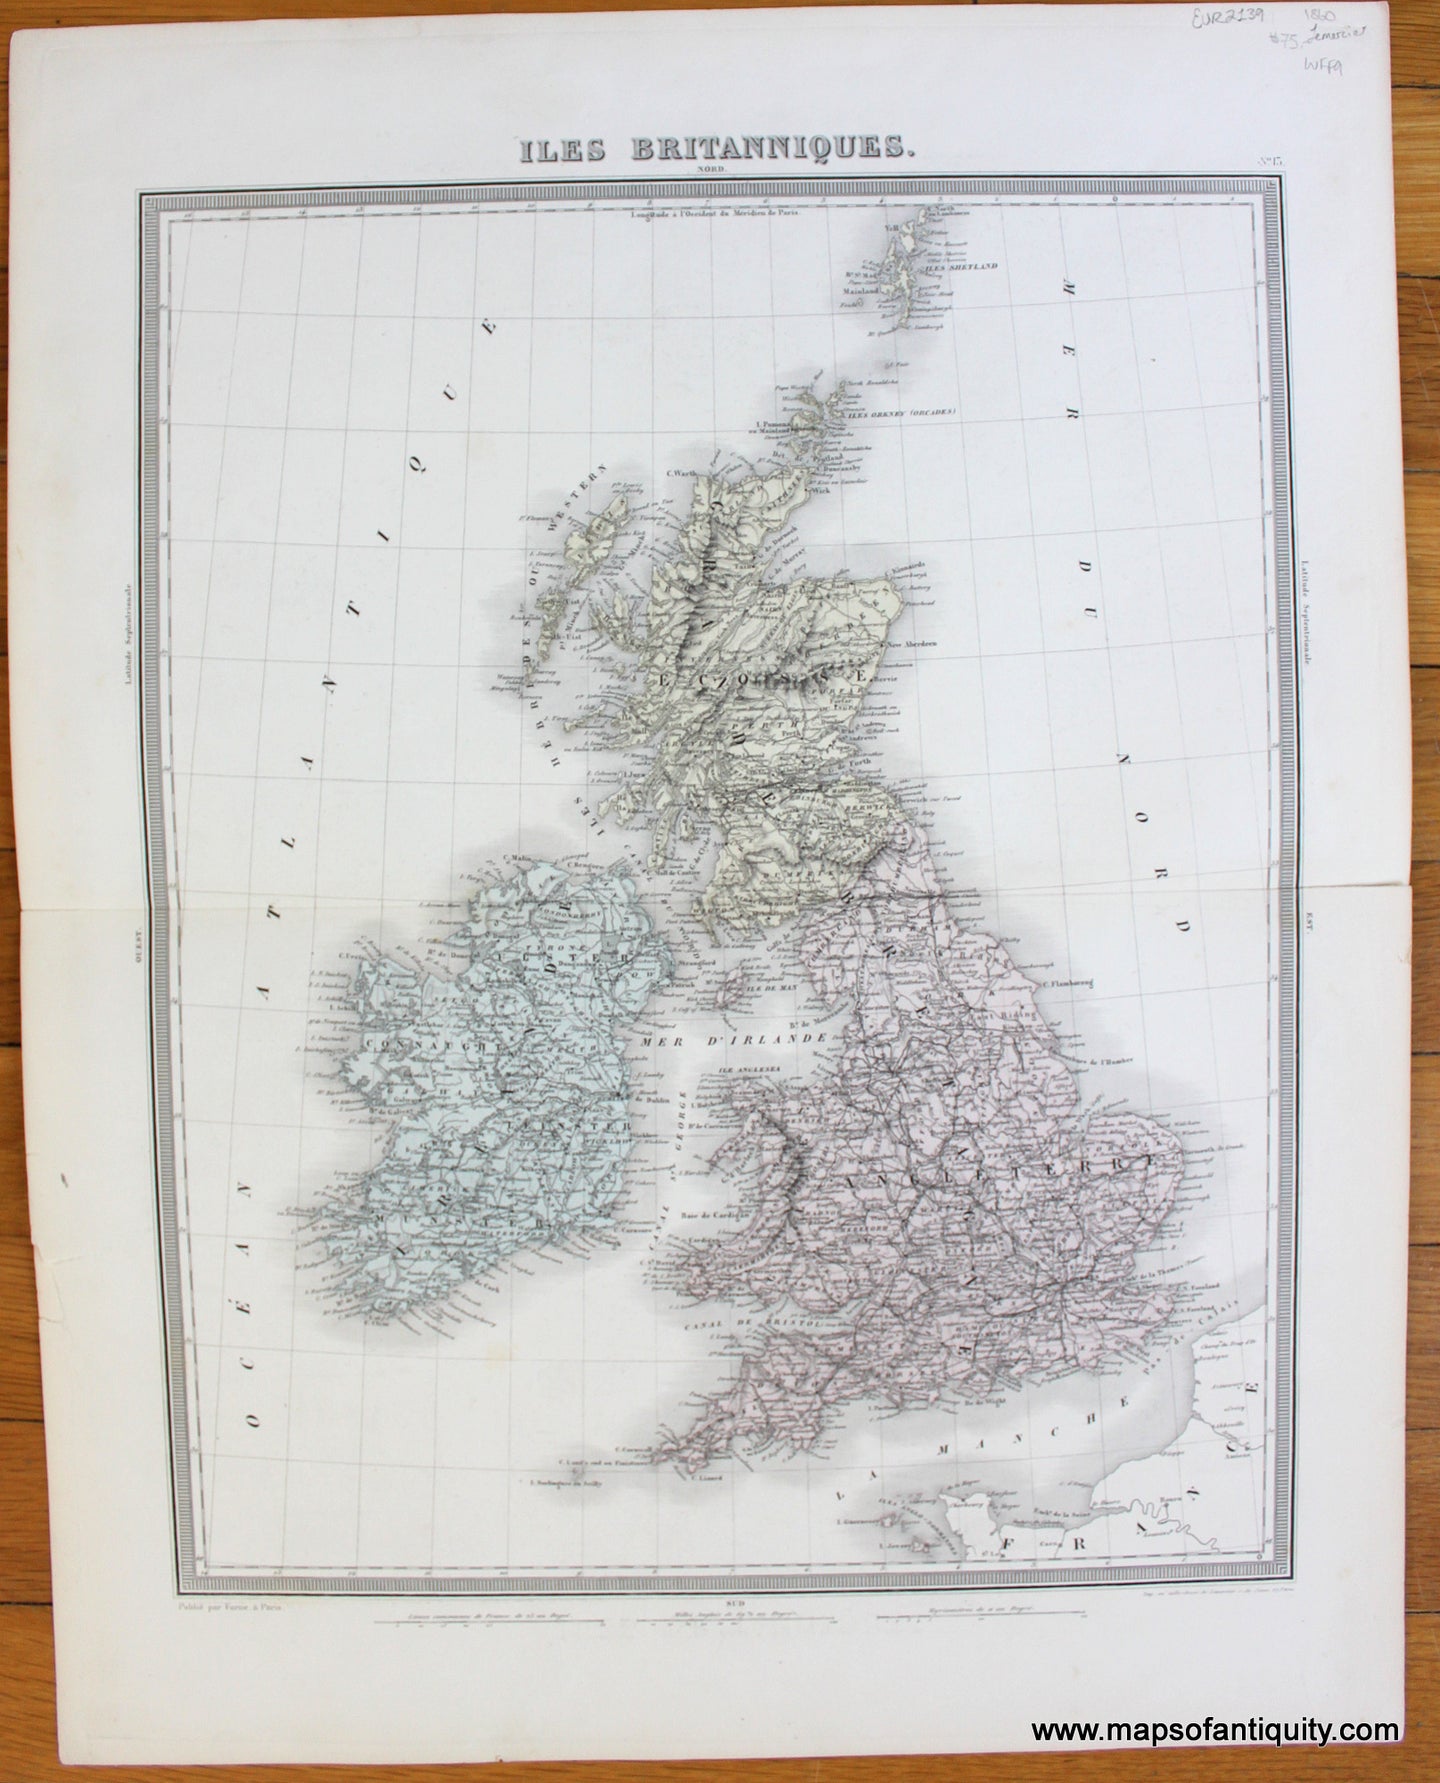 Antique-Hand-Colored-Map-Iles-Britanniques.-Europe-England-Scotland-Ireland-1860-Lemercier-Maps-Of-Antiquity